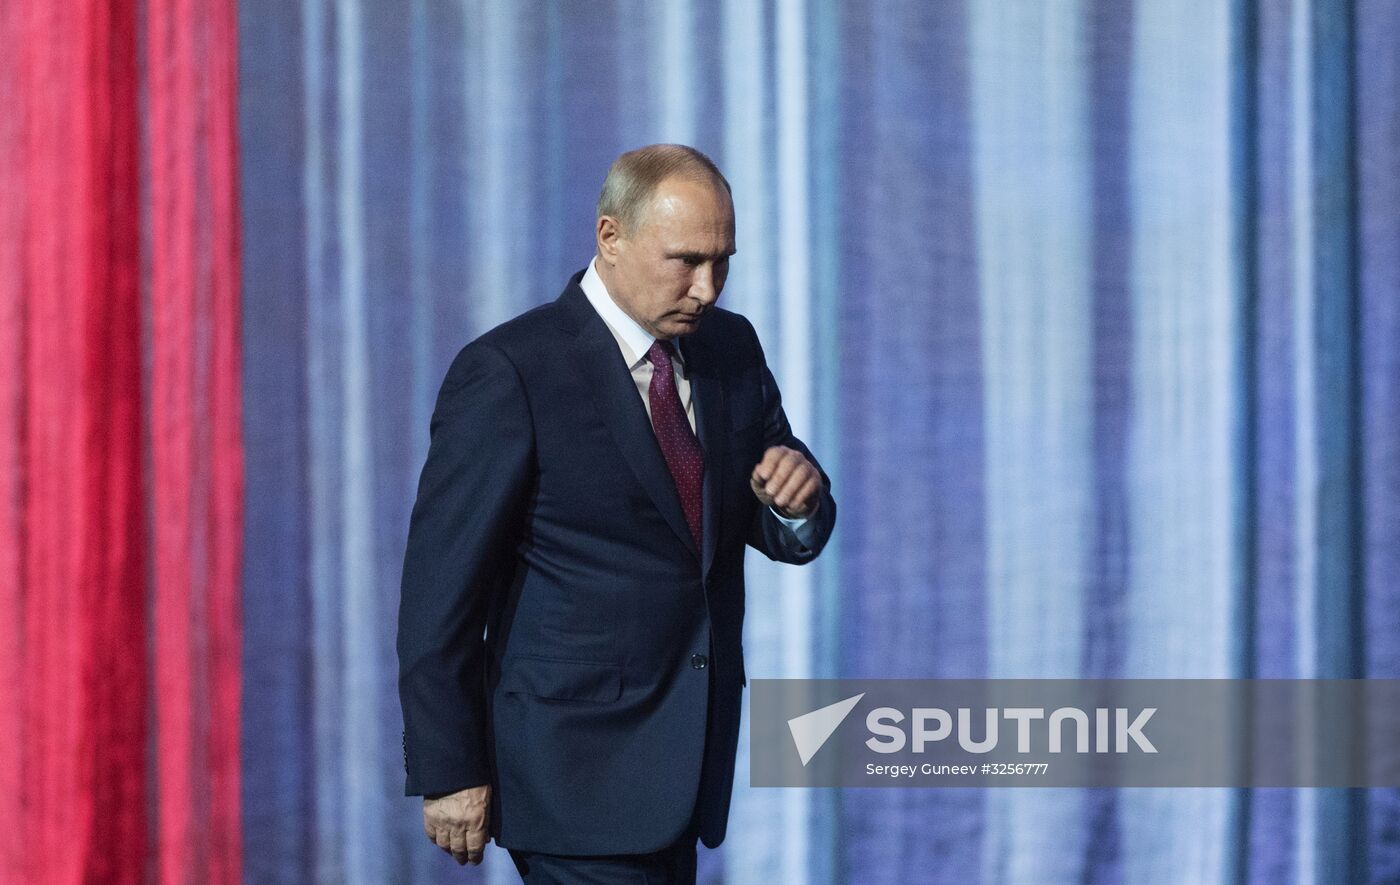 President Vladimir Putin makes speech on Heroes of the Fatherland Day